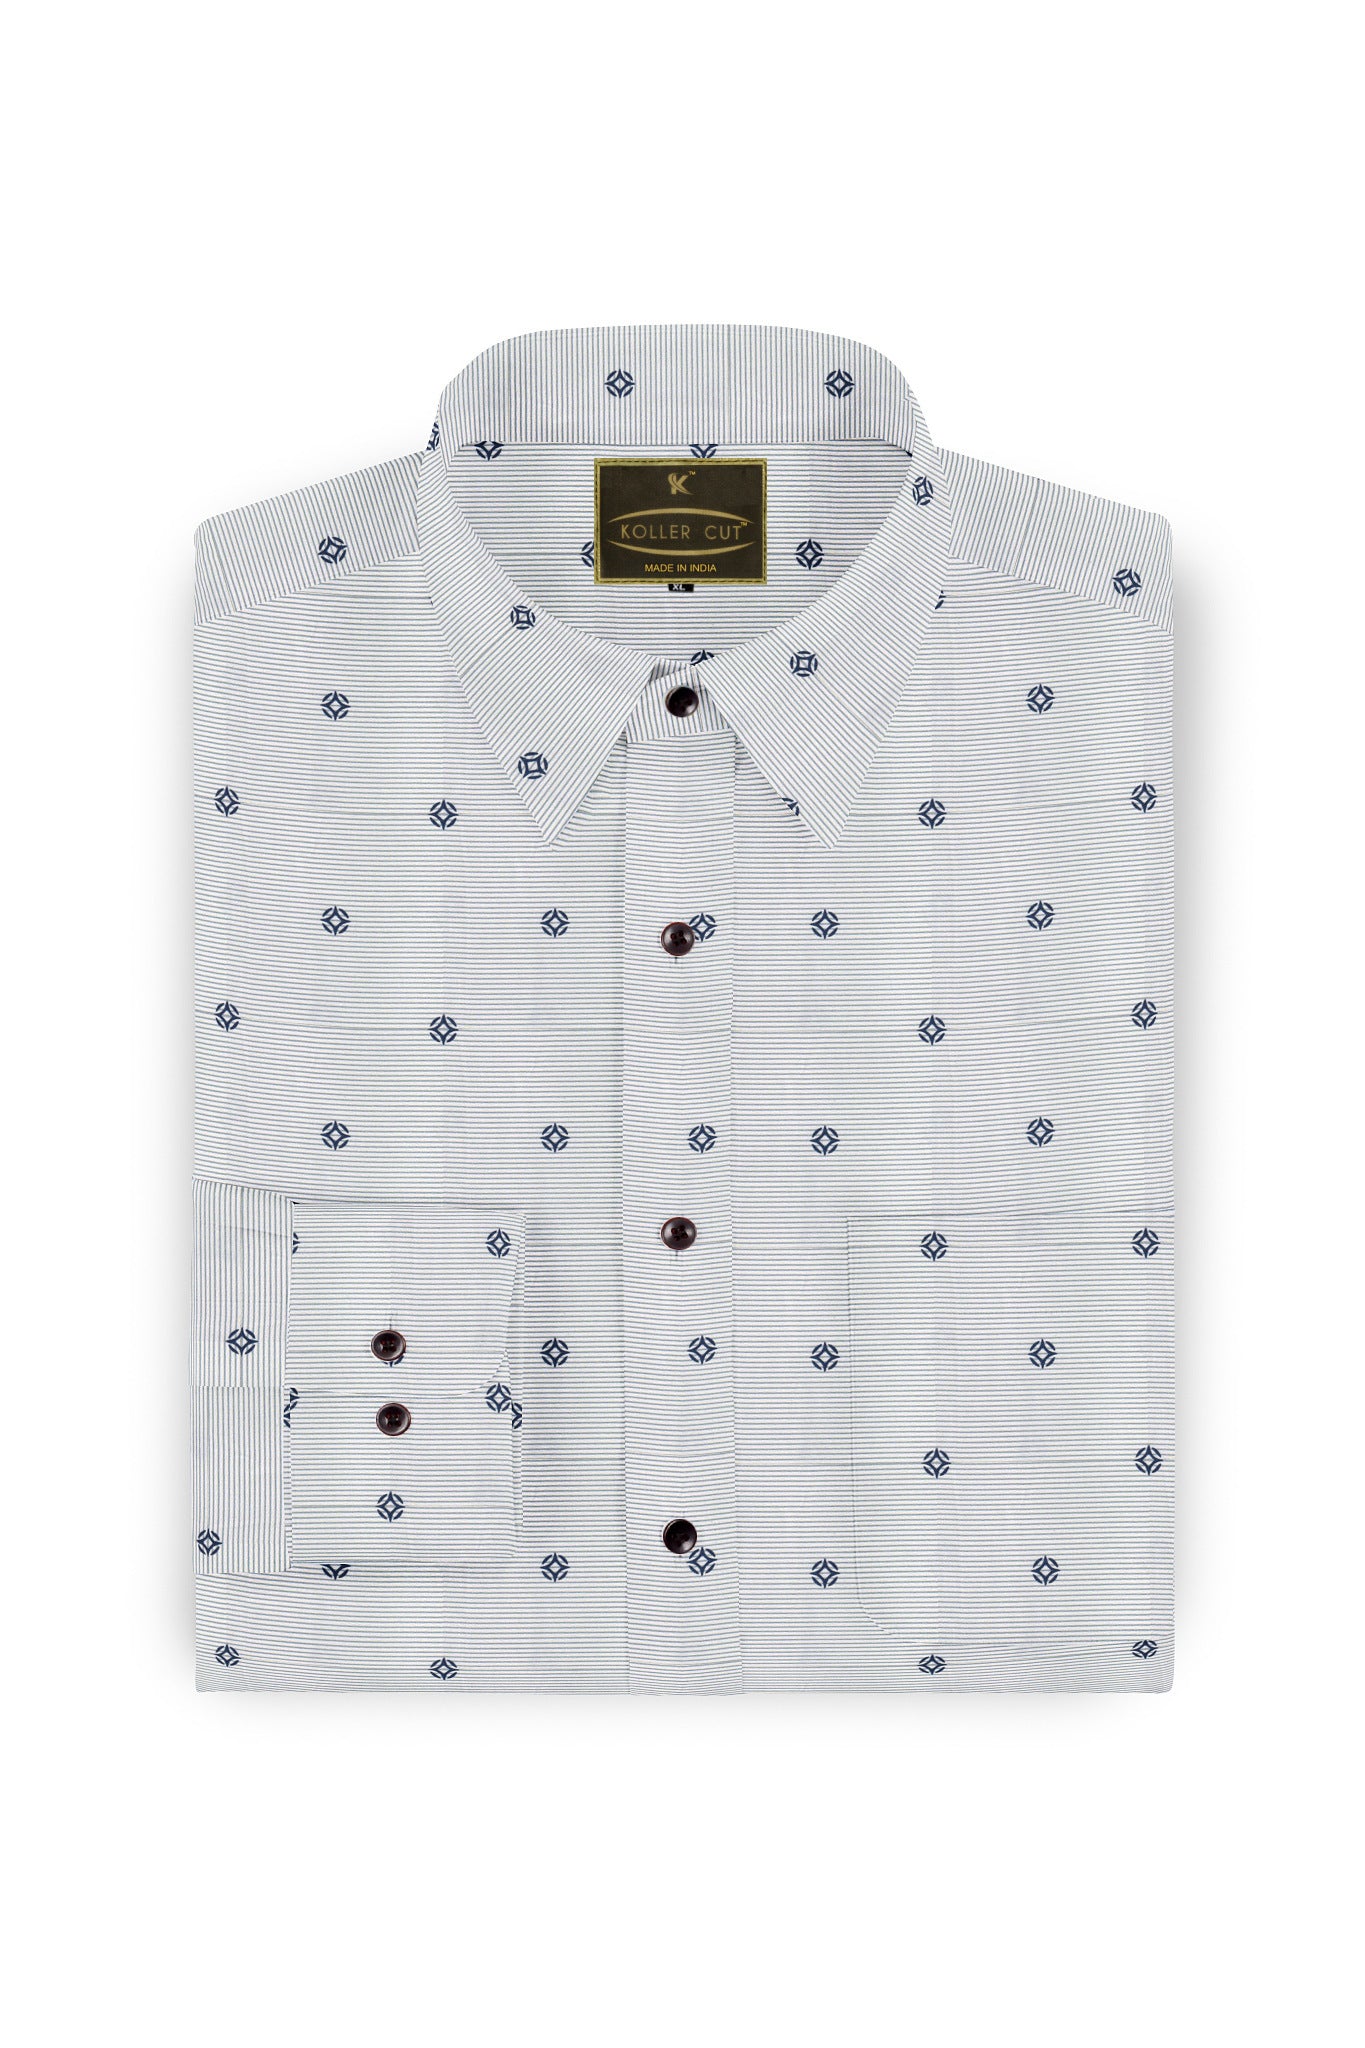 Quartz White with Olive Pinstriped Denim Blue Buti Patterned Printed Cotton Shirt